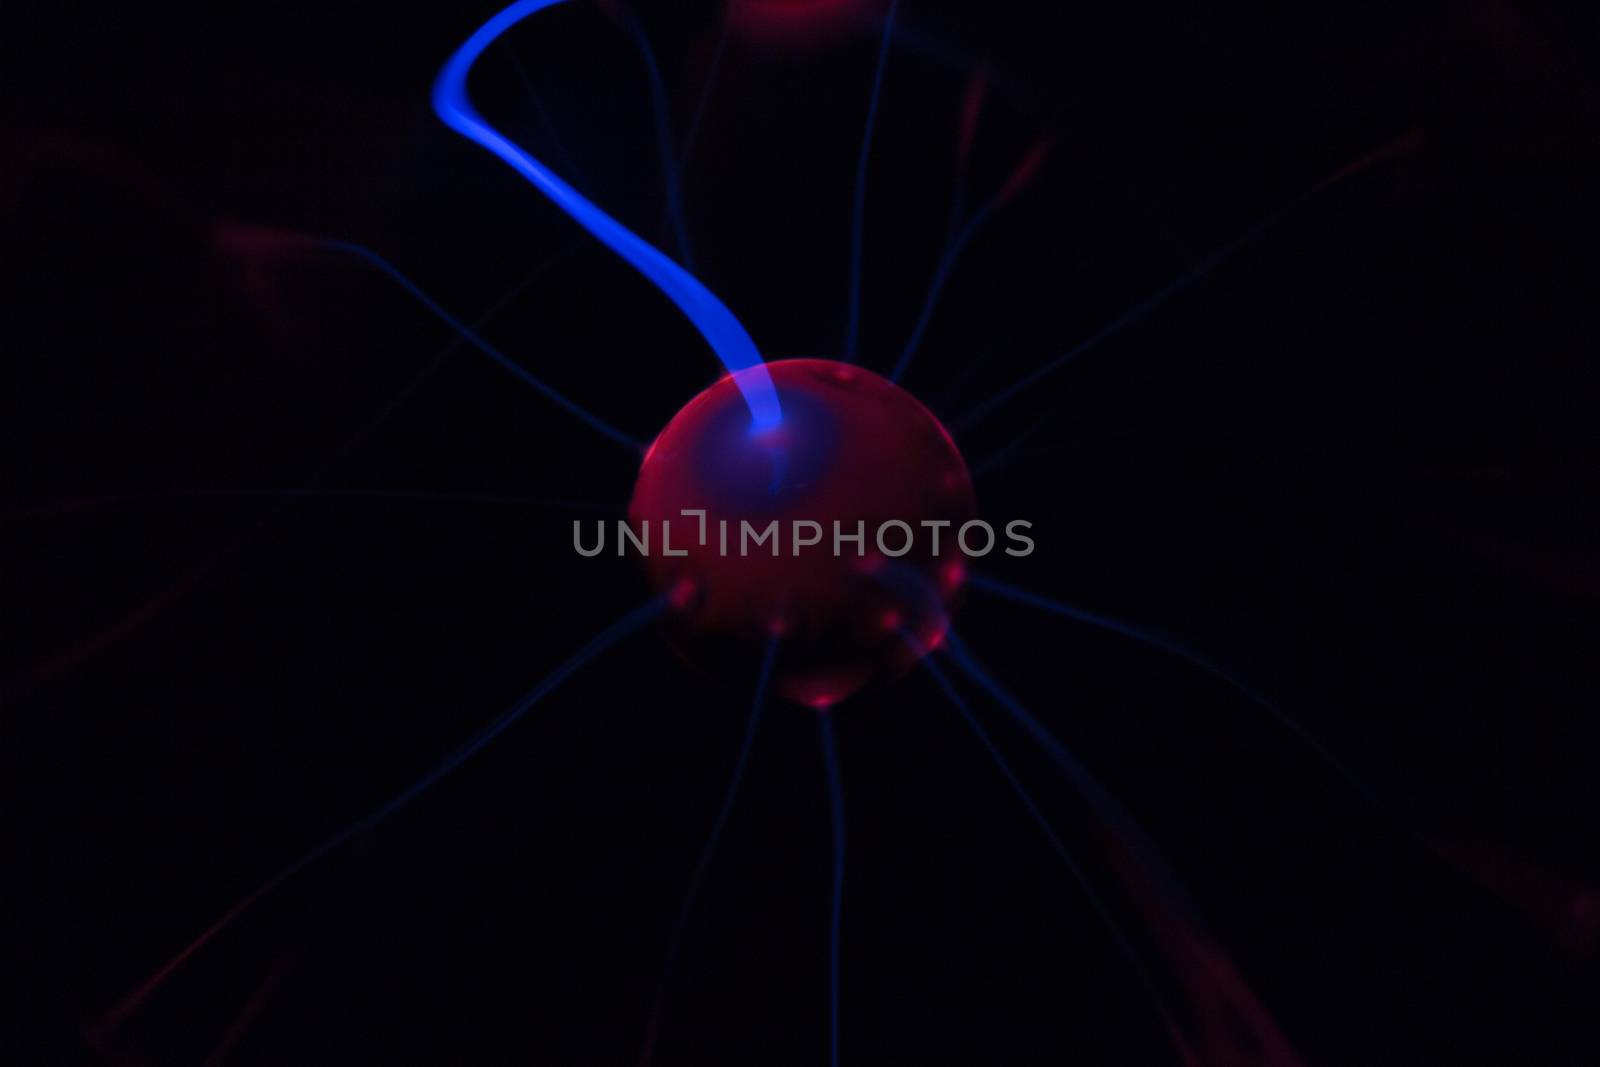 Plasma Sphere by robertboss